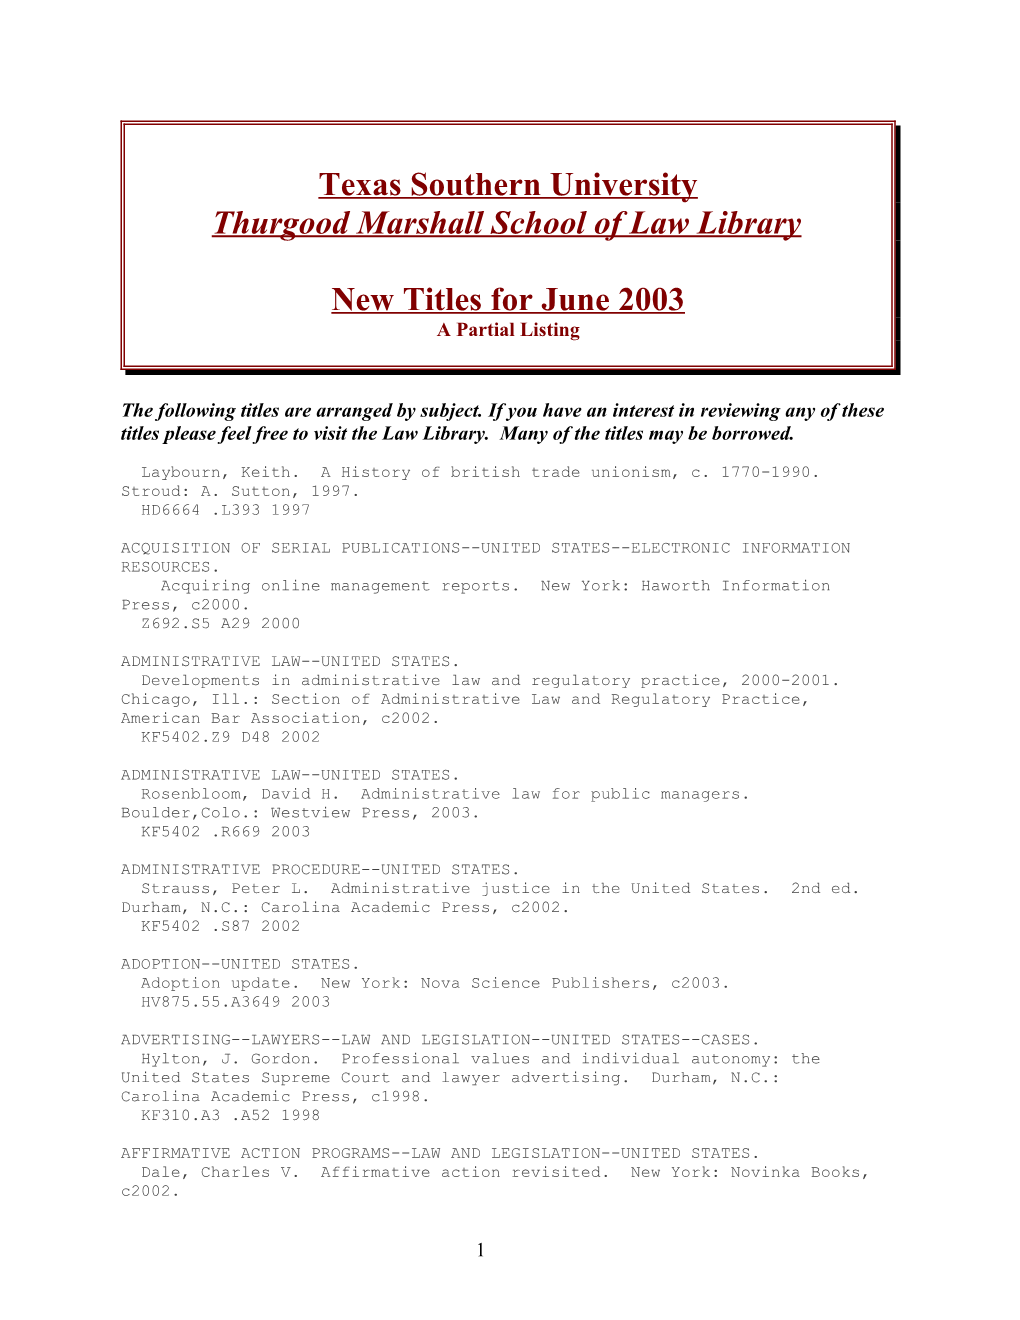 Texas Southern University s1